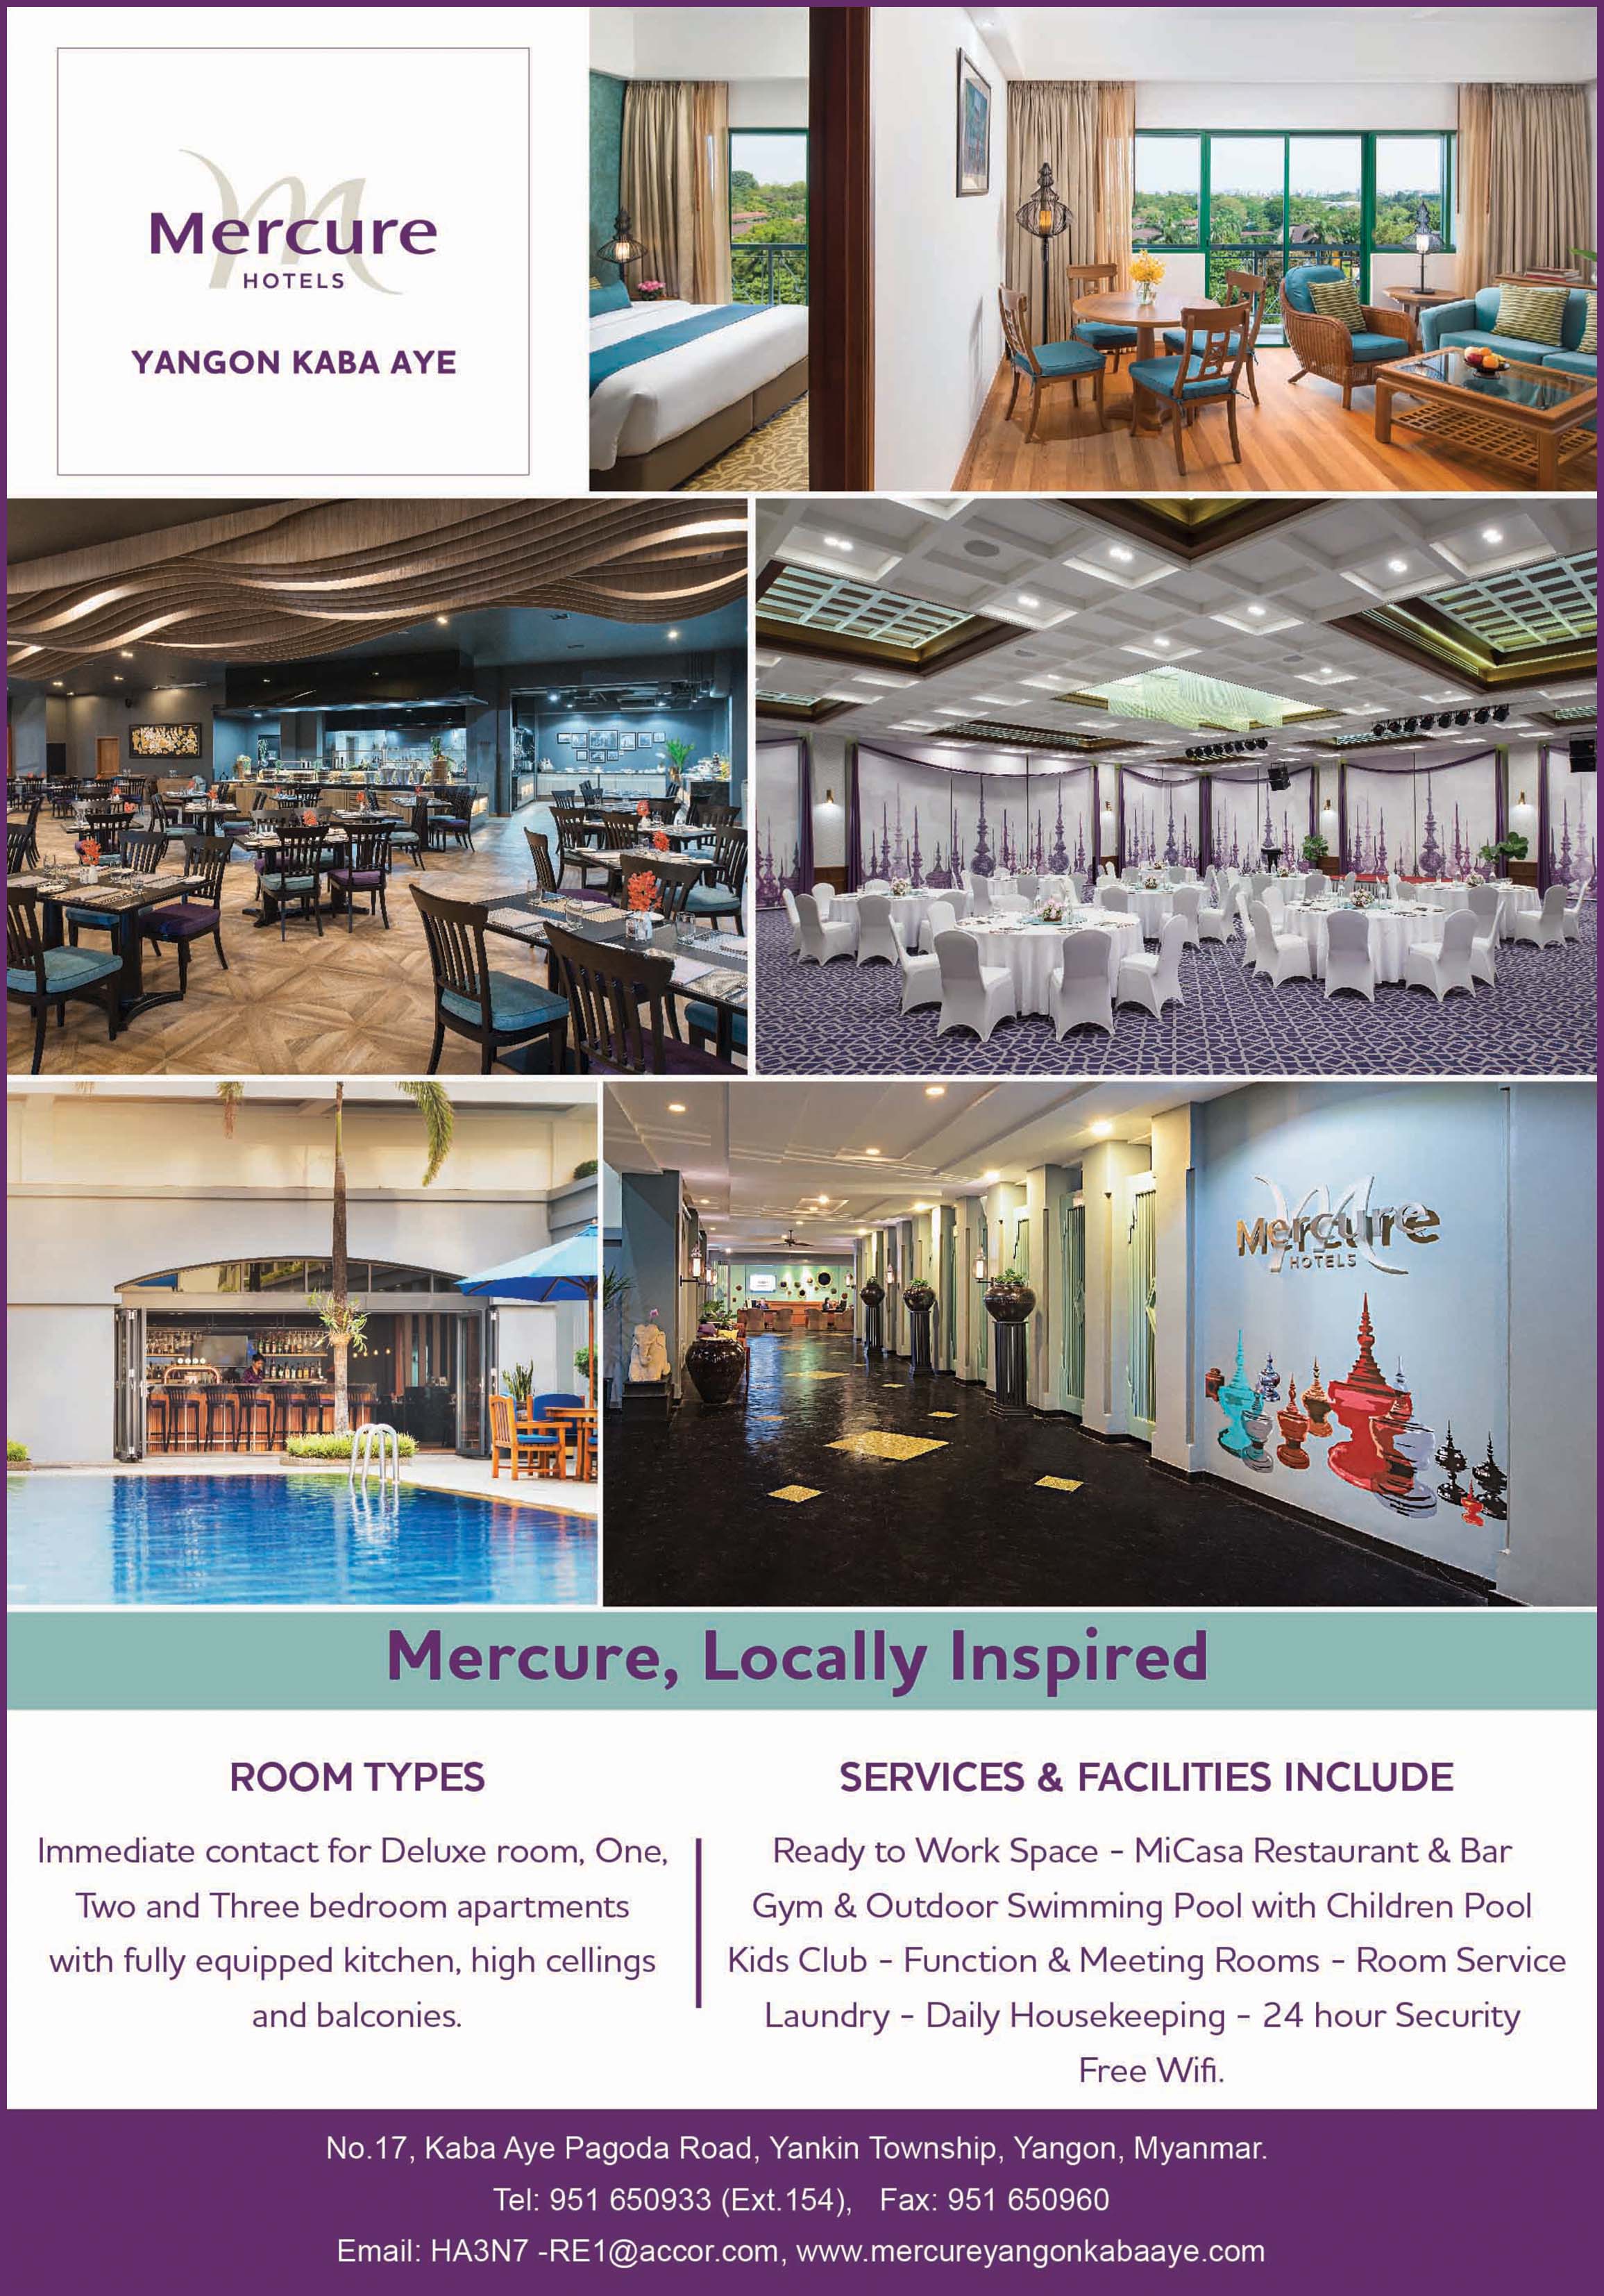 Mercure Hotels Yangon Kaba Aye